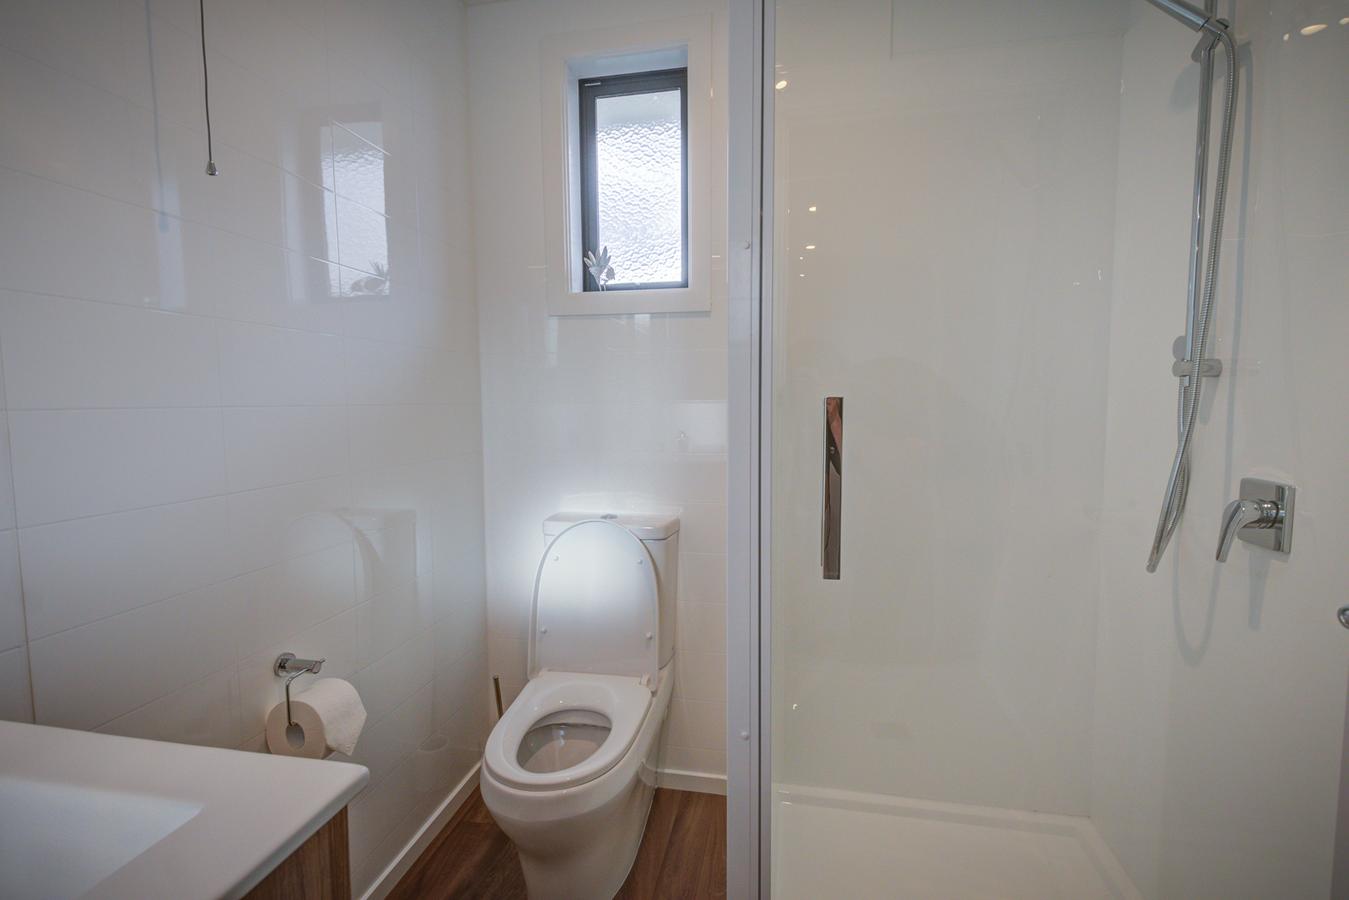 Bathroom with toilet, handbasin and shower at Dusky Motels.